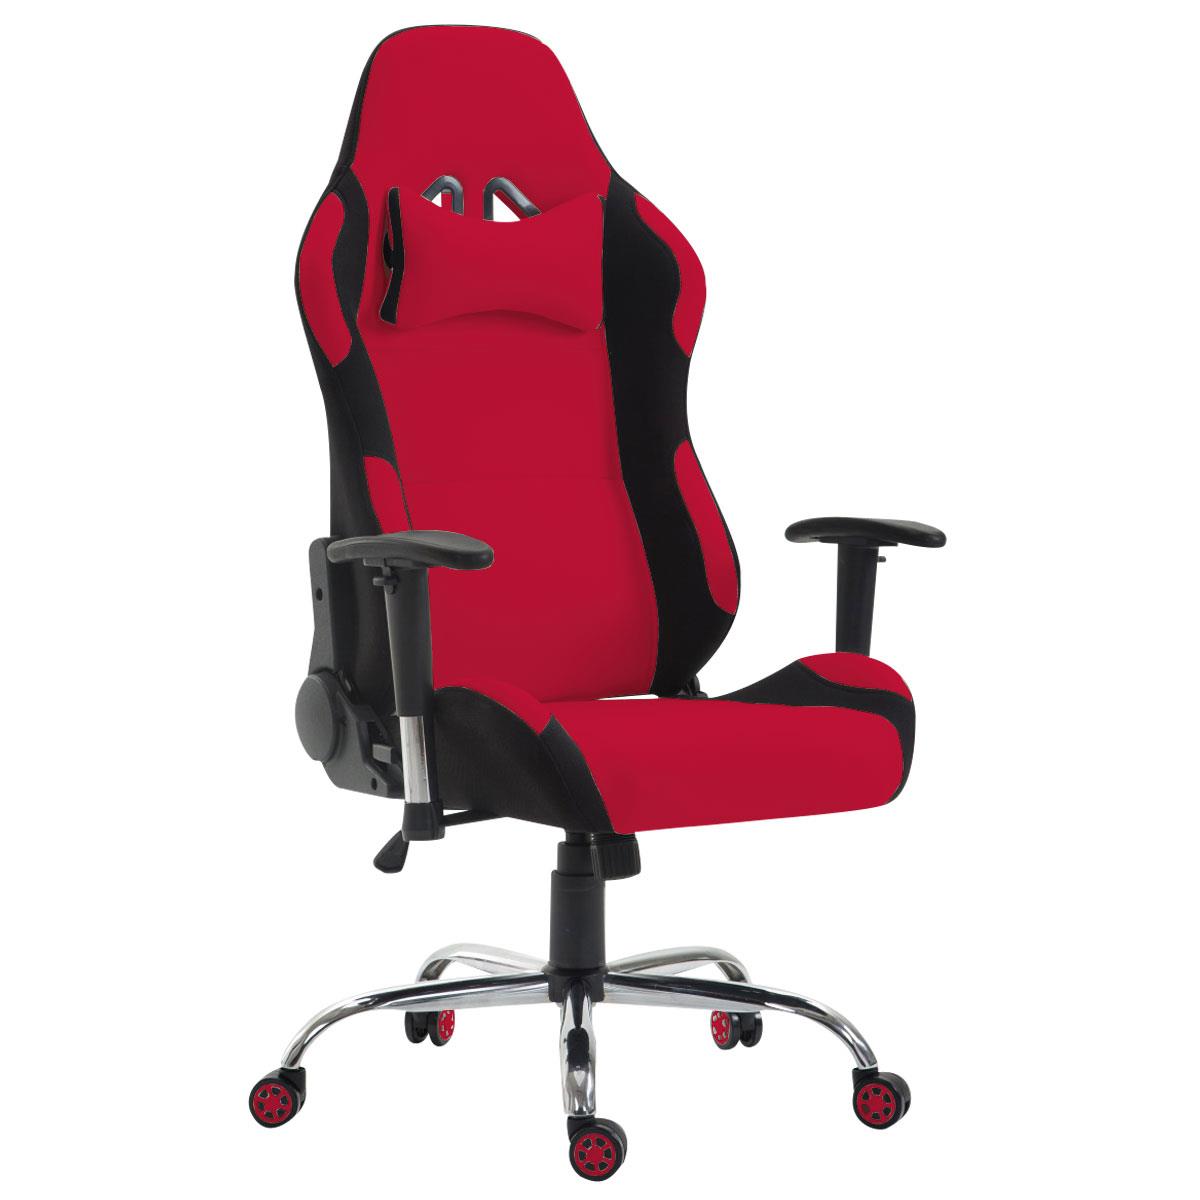 Gaming-Stuhl ROSBY STOF. Sportliches Design und hoher Komfort, Farbe Rot